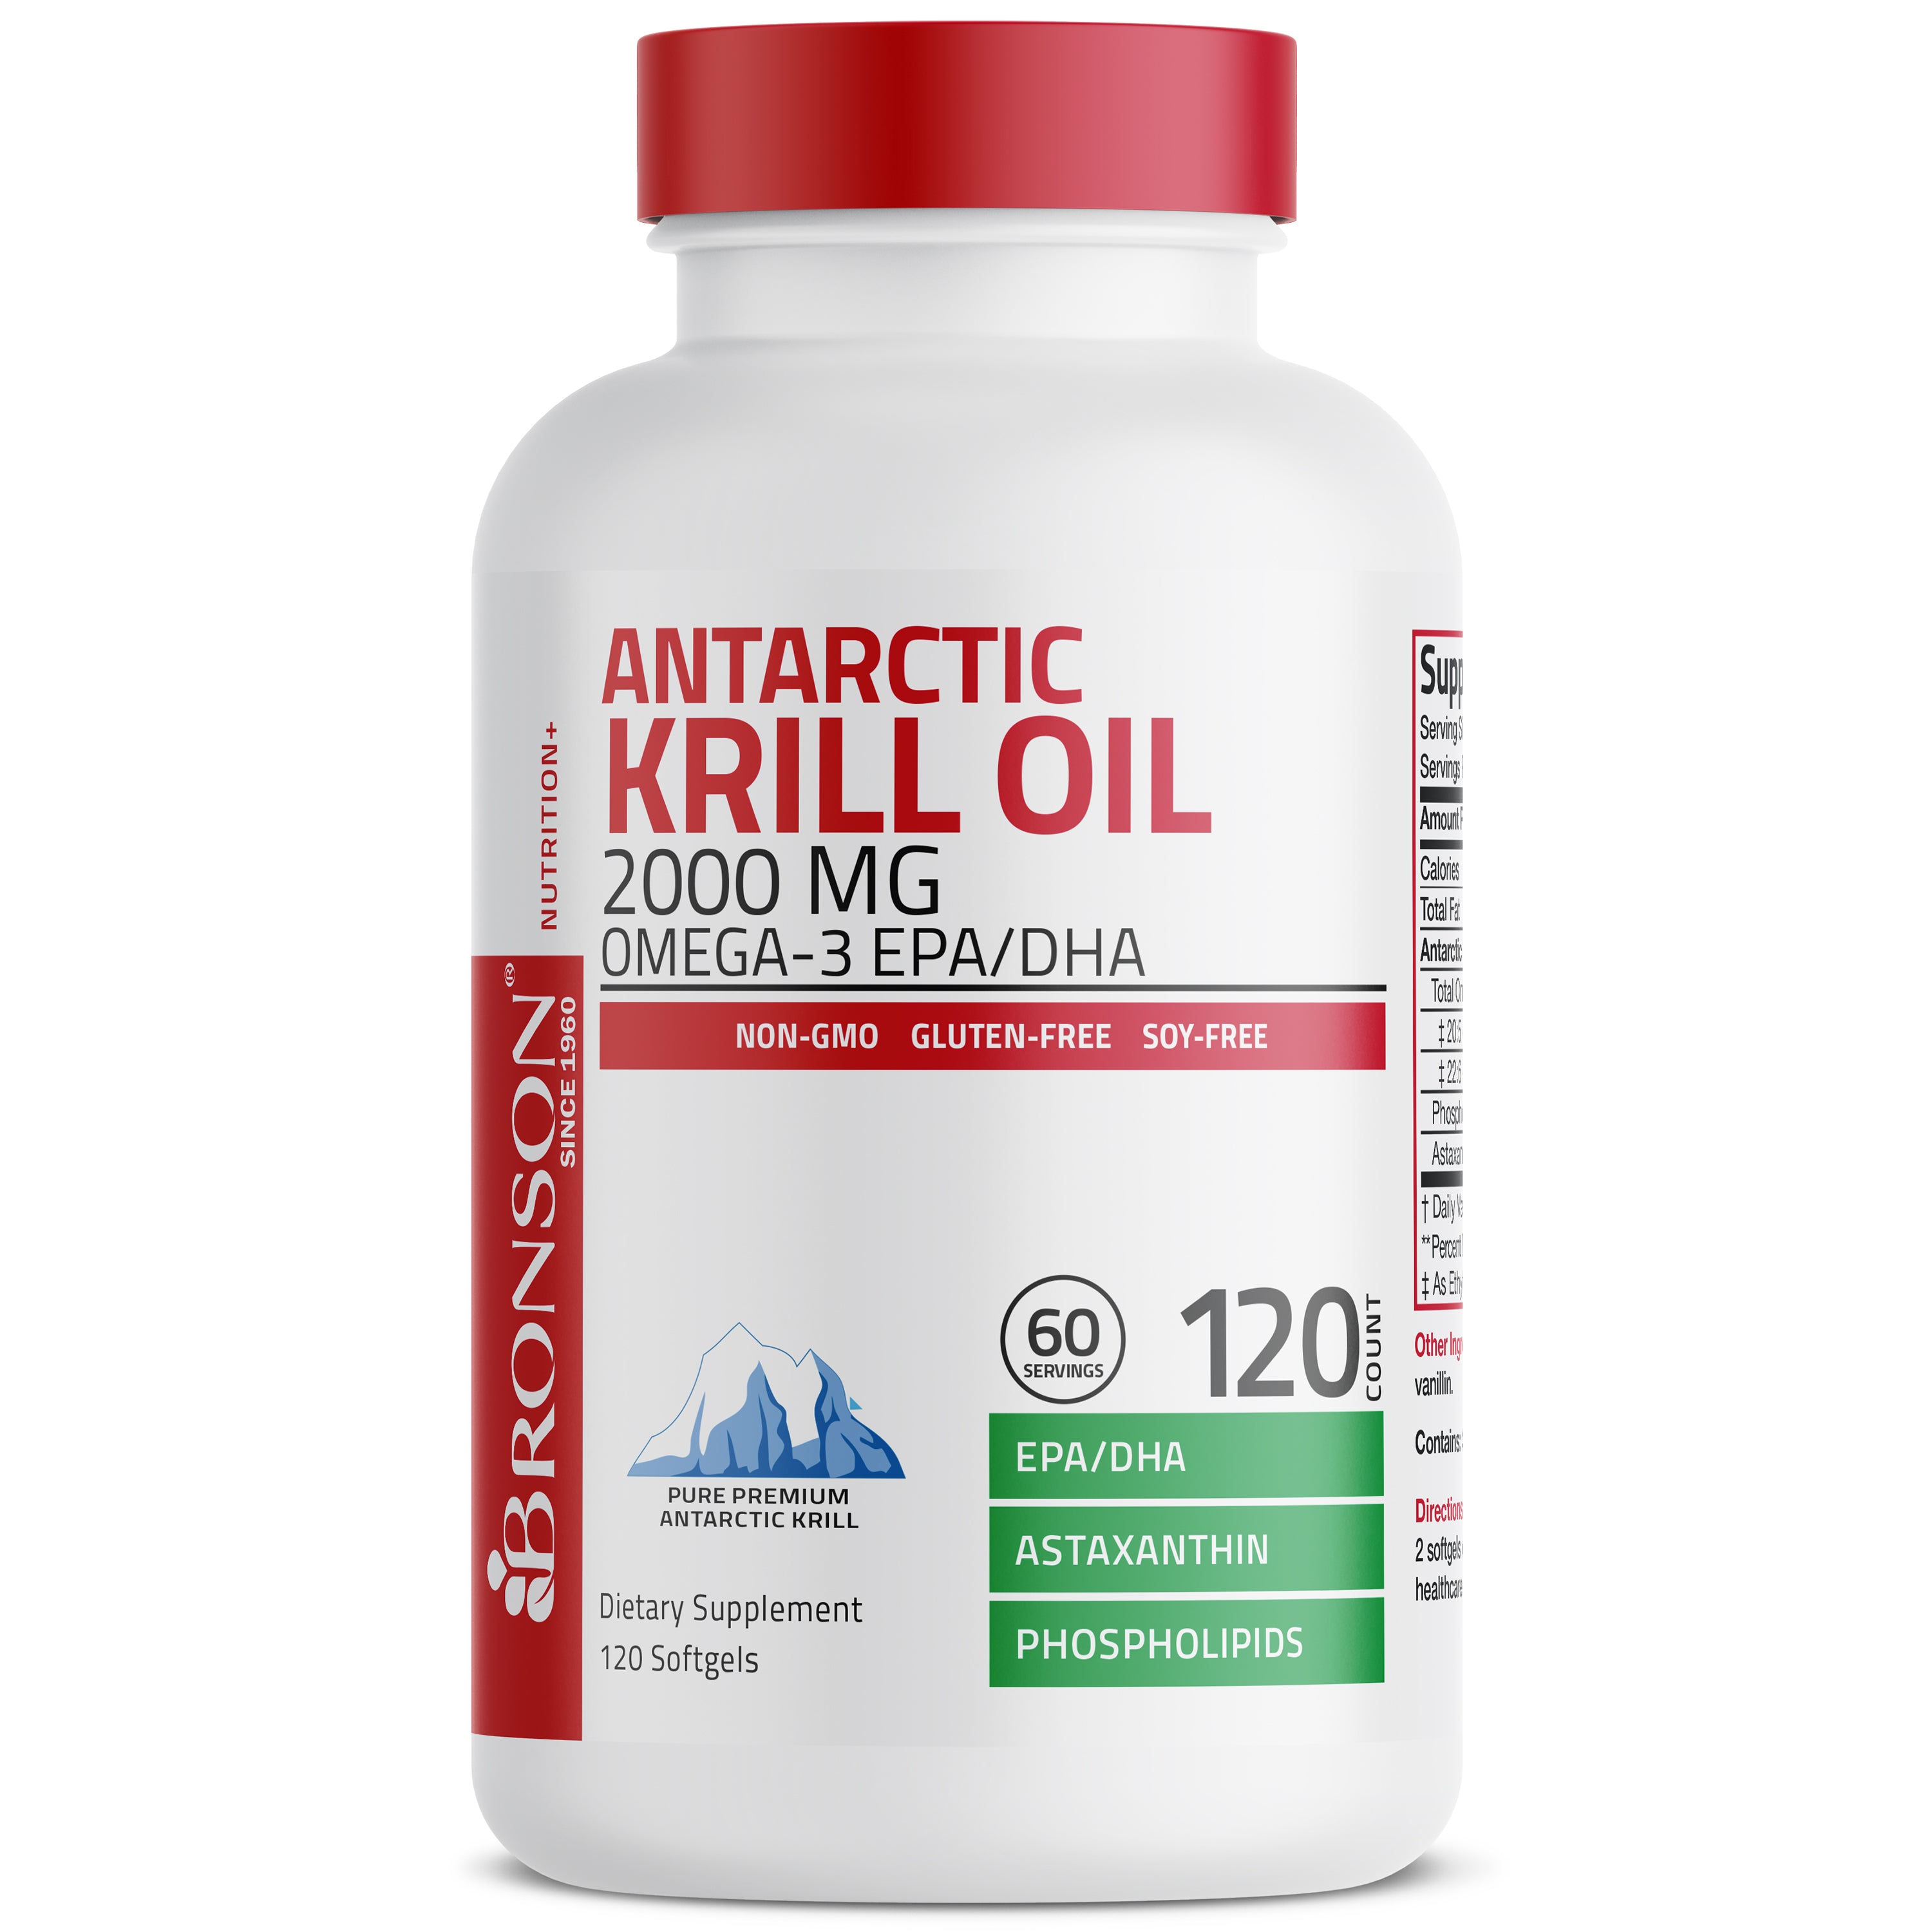 Antarctic Krill Oil Omega-3 EPA DHA Non-GMO - 2,000 mg view 4 of 6